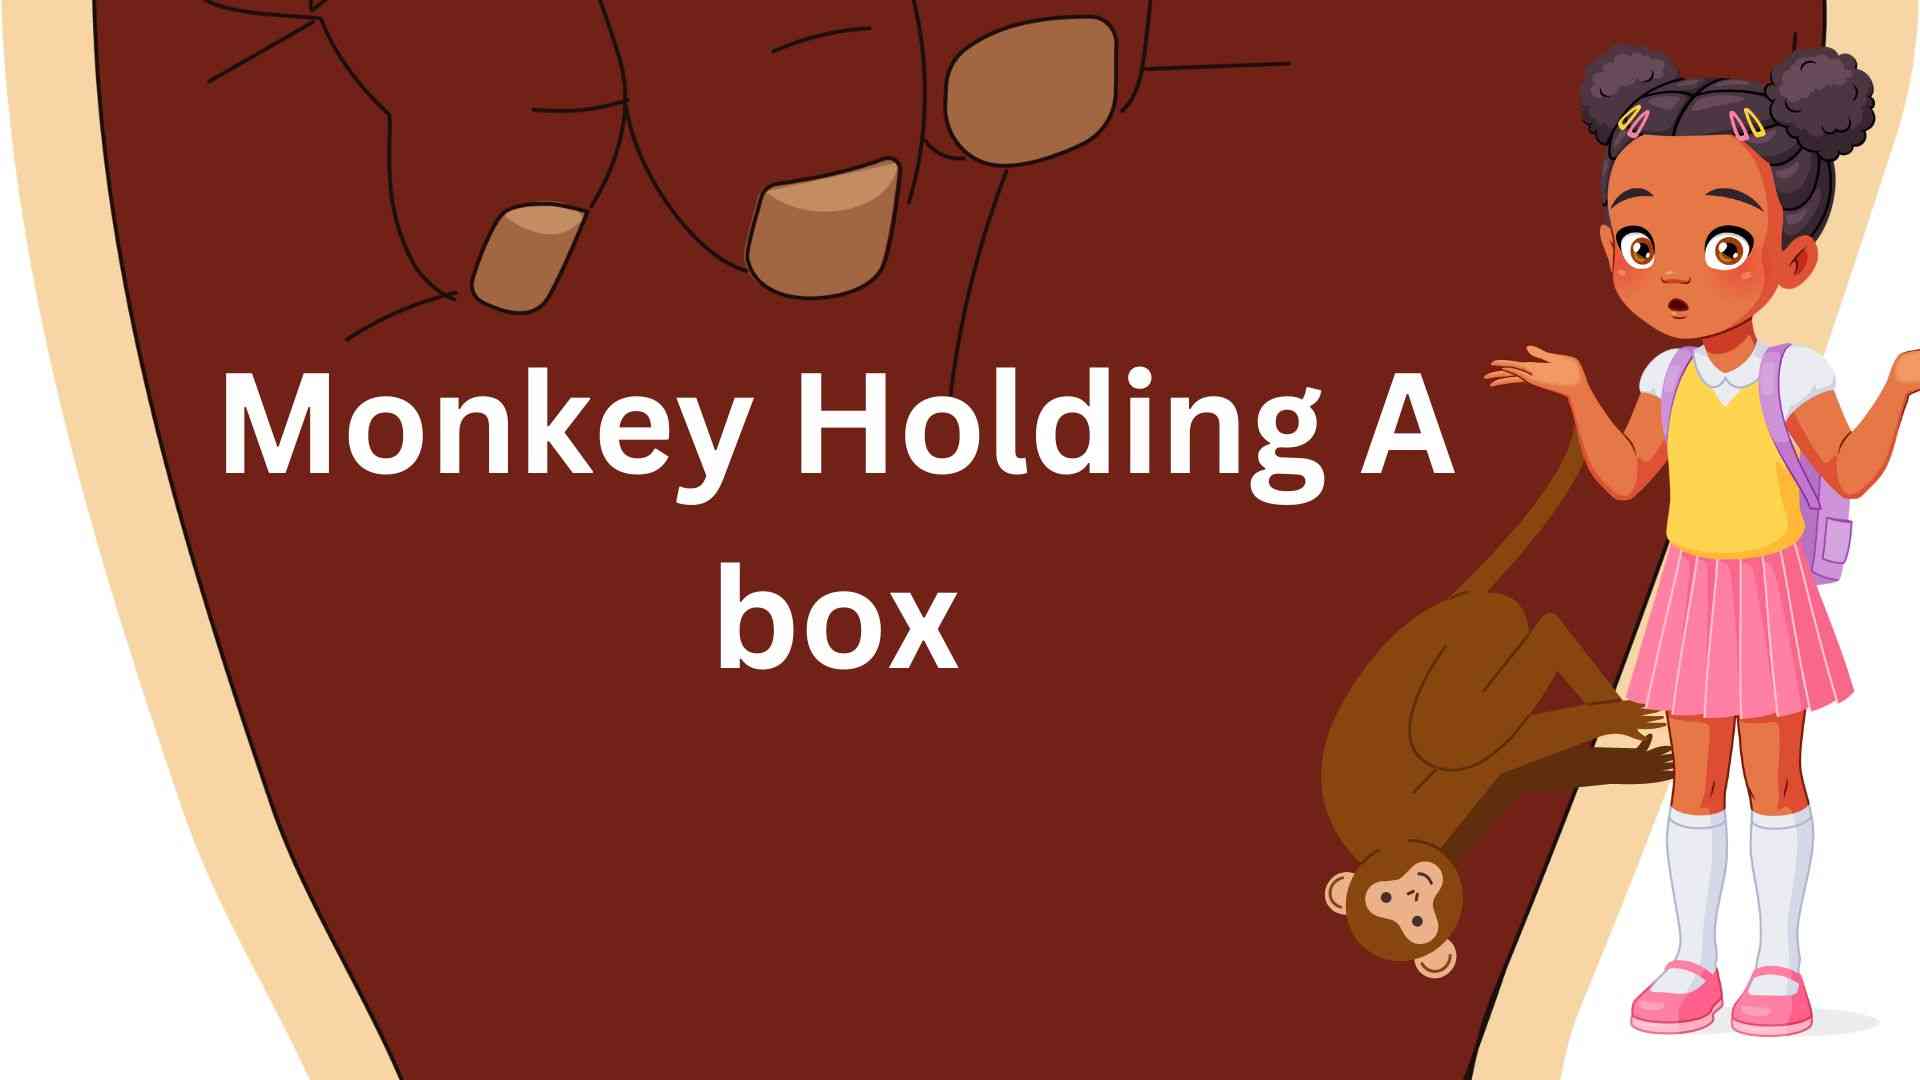 Monkey Holding A box: Google Hurted Sentiments of Black Society